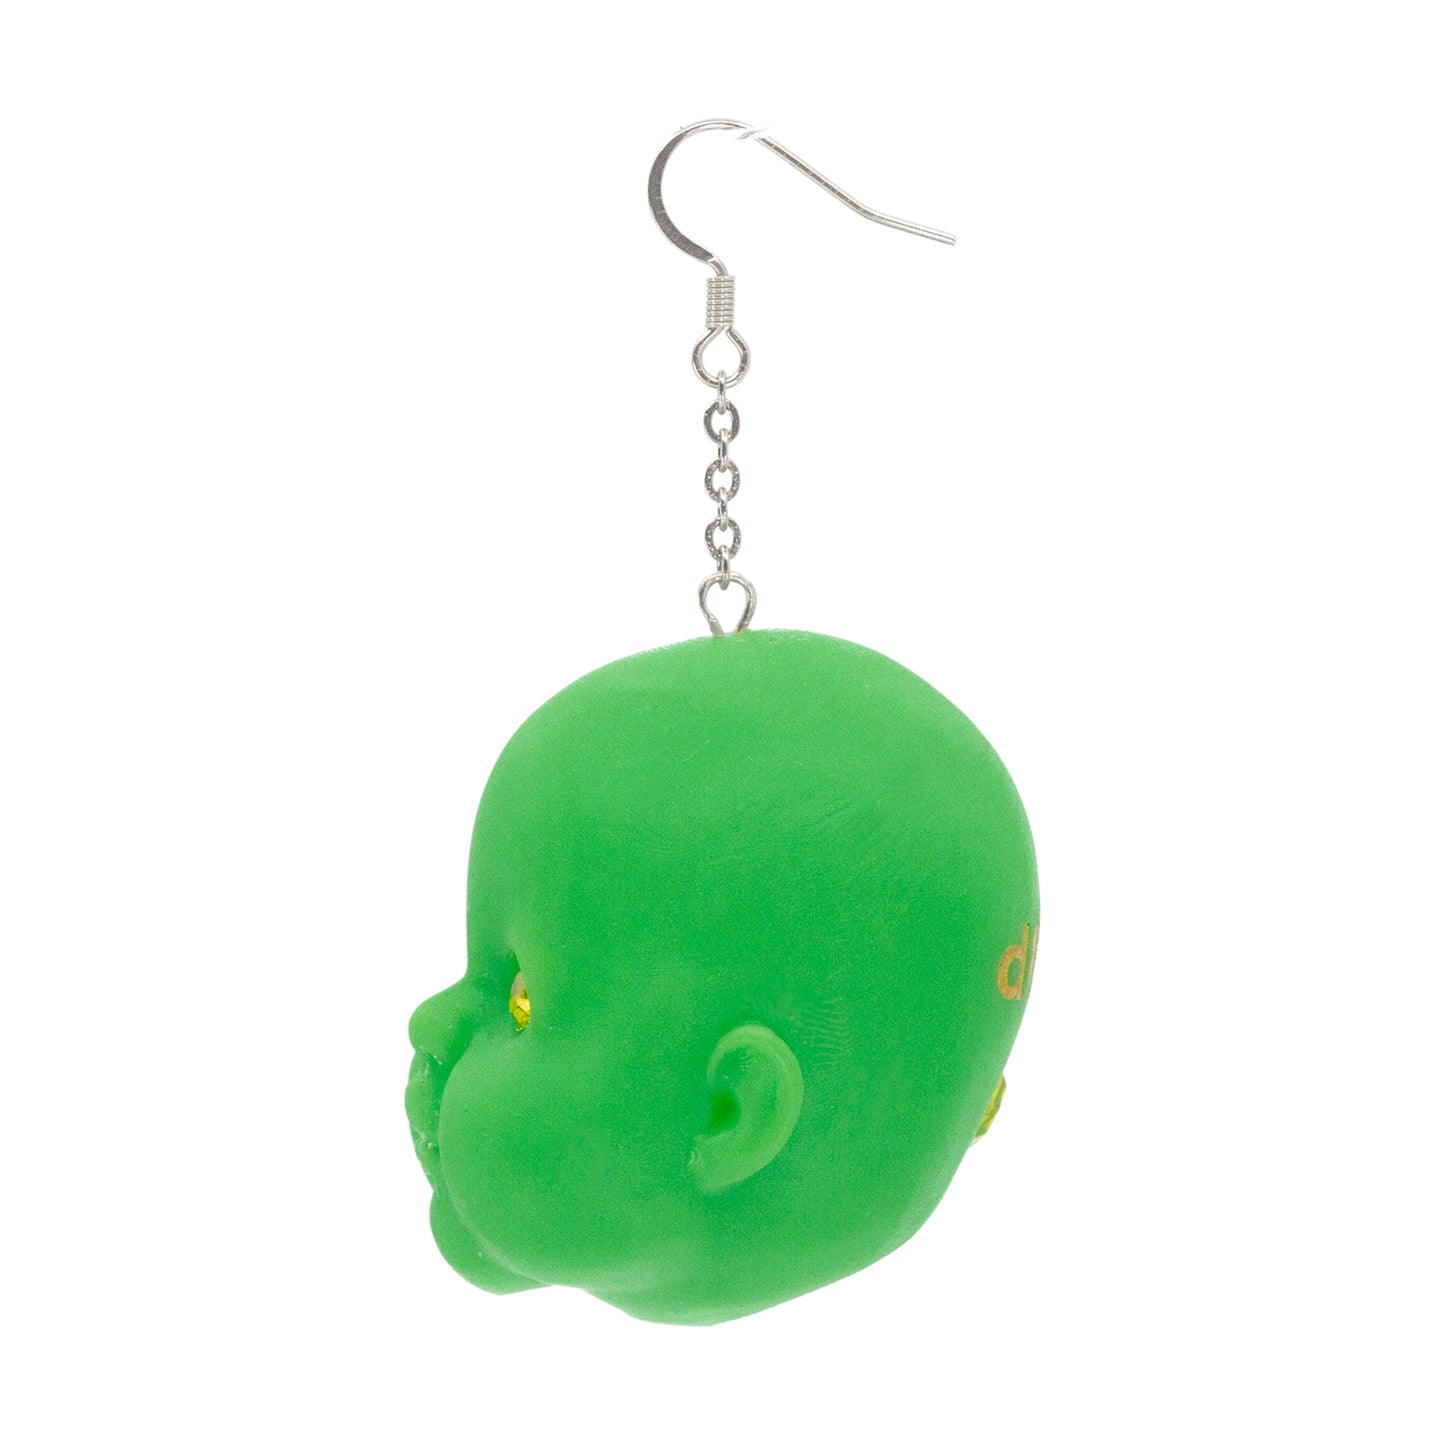 Key Lime Pie Baby Doll Earrings